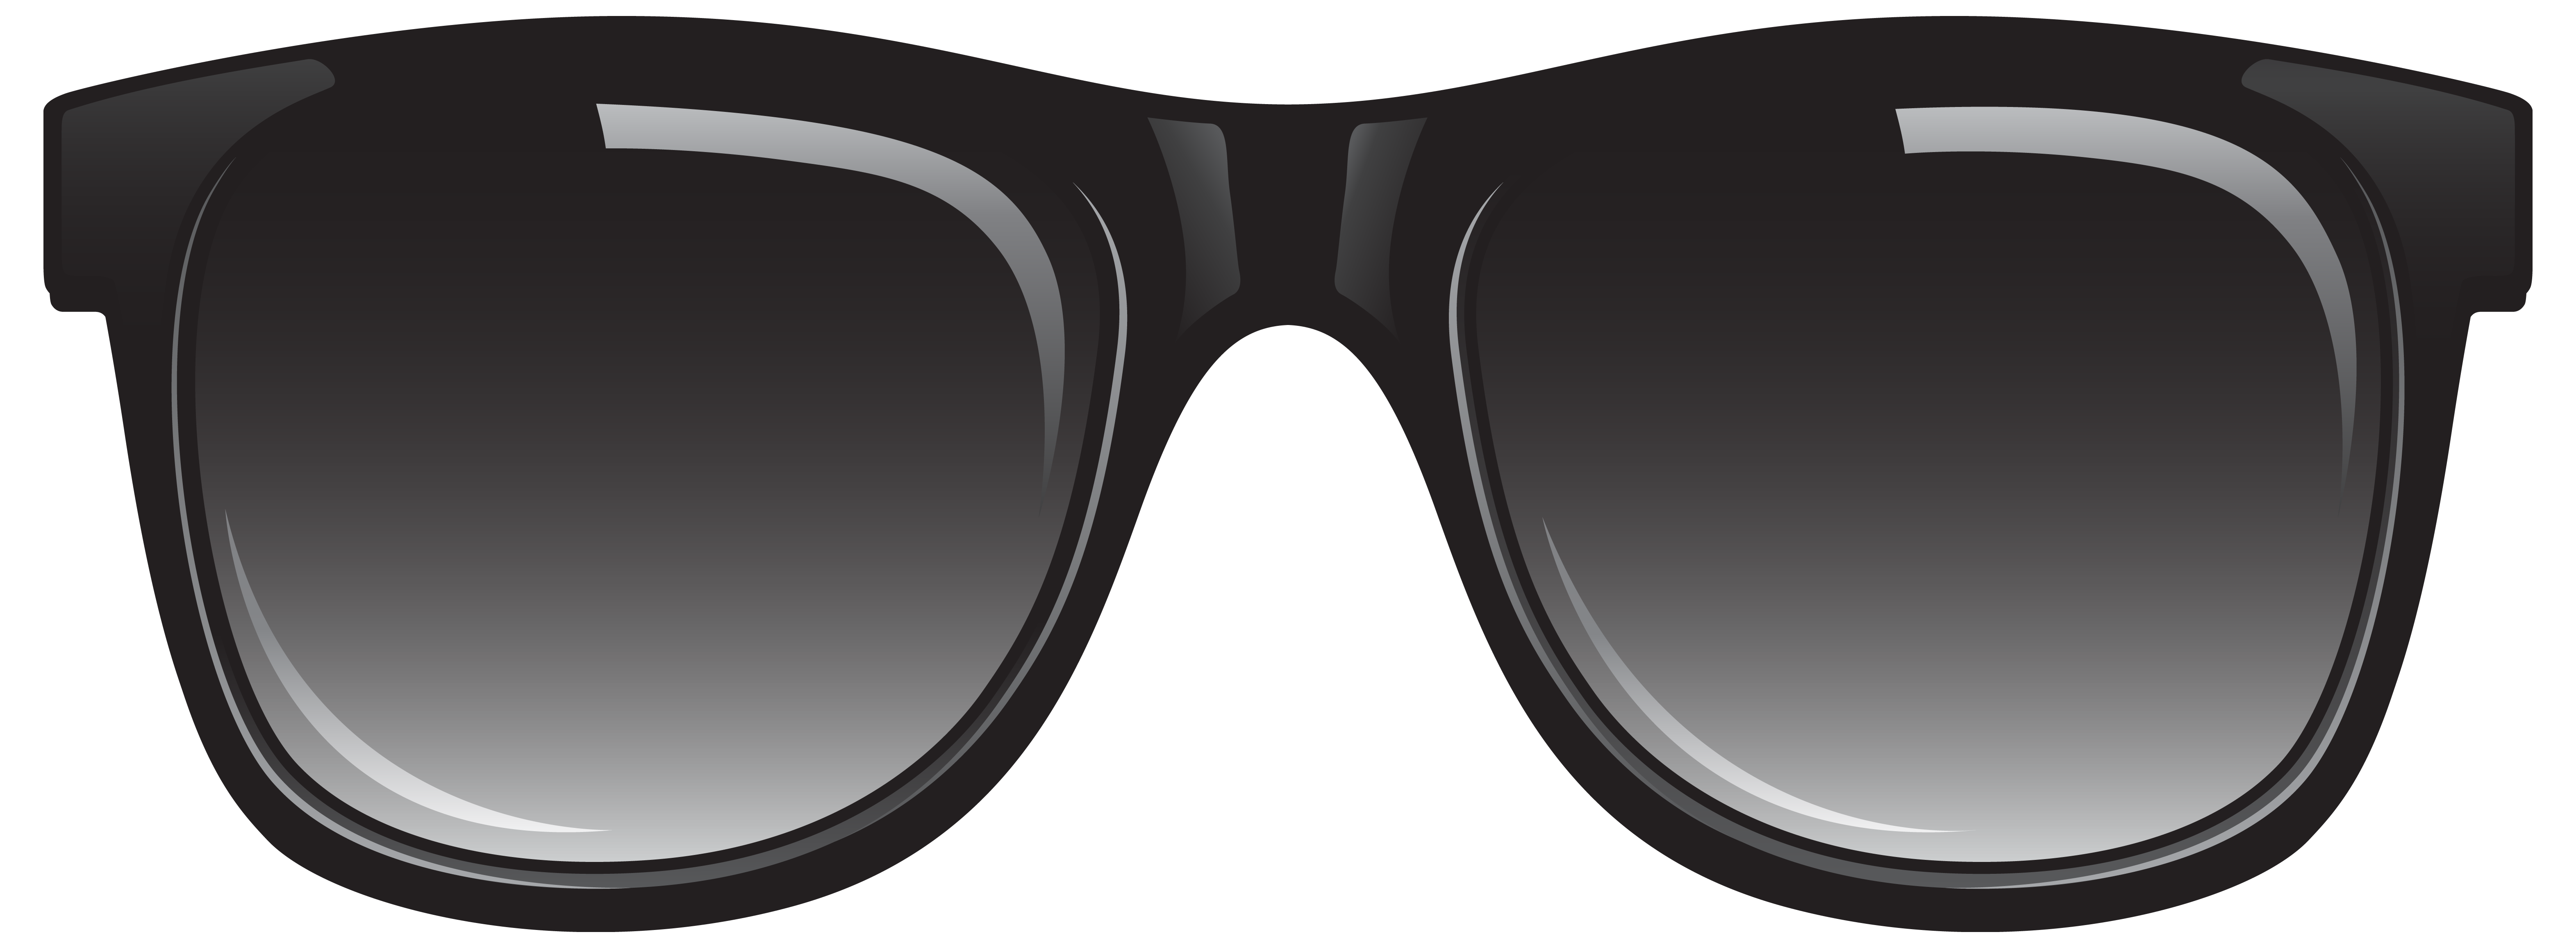 Aviator sunglasses Ray-Ban Wayfarer Carrera Sunglasses - Black ...